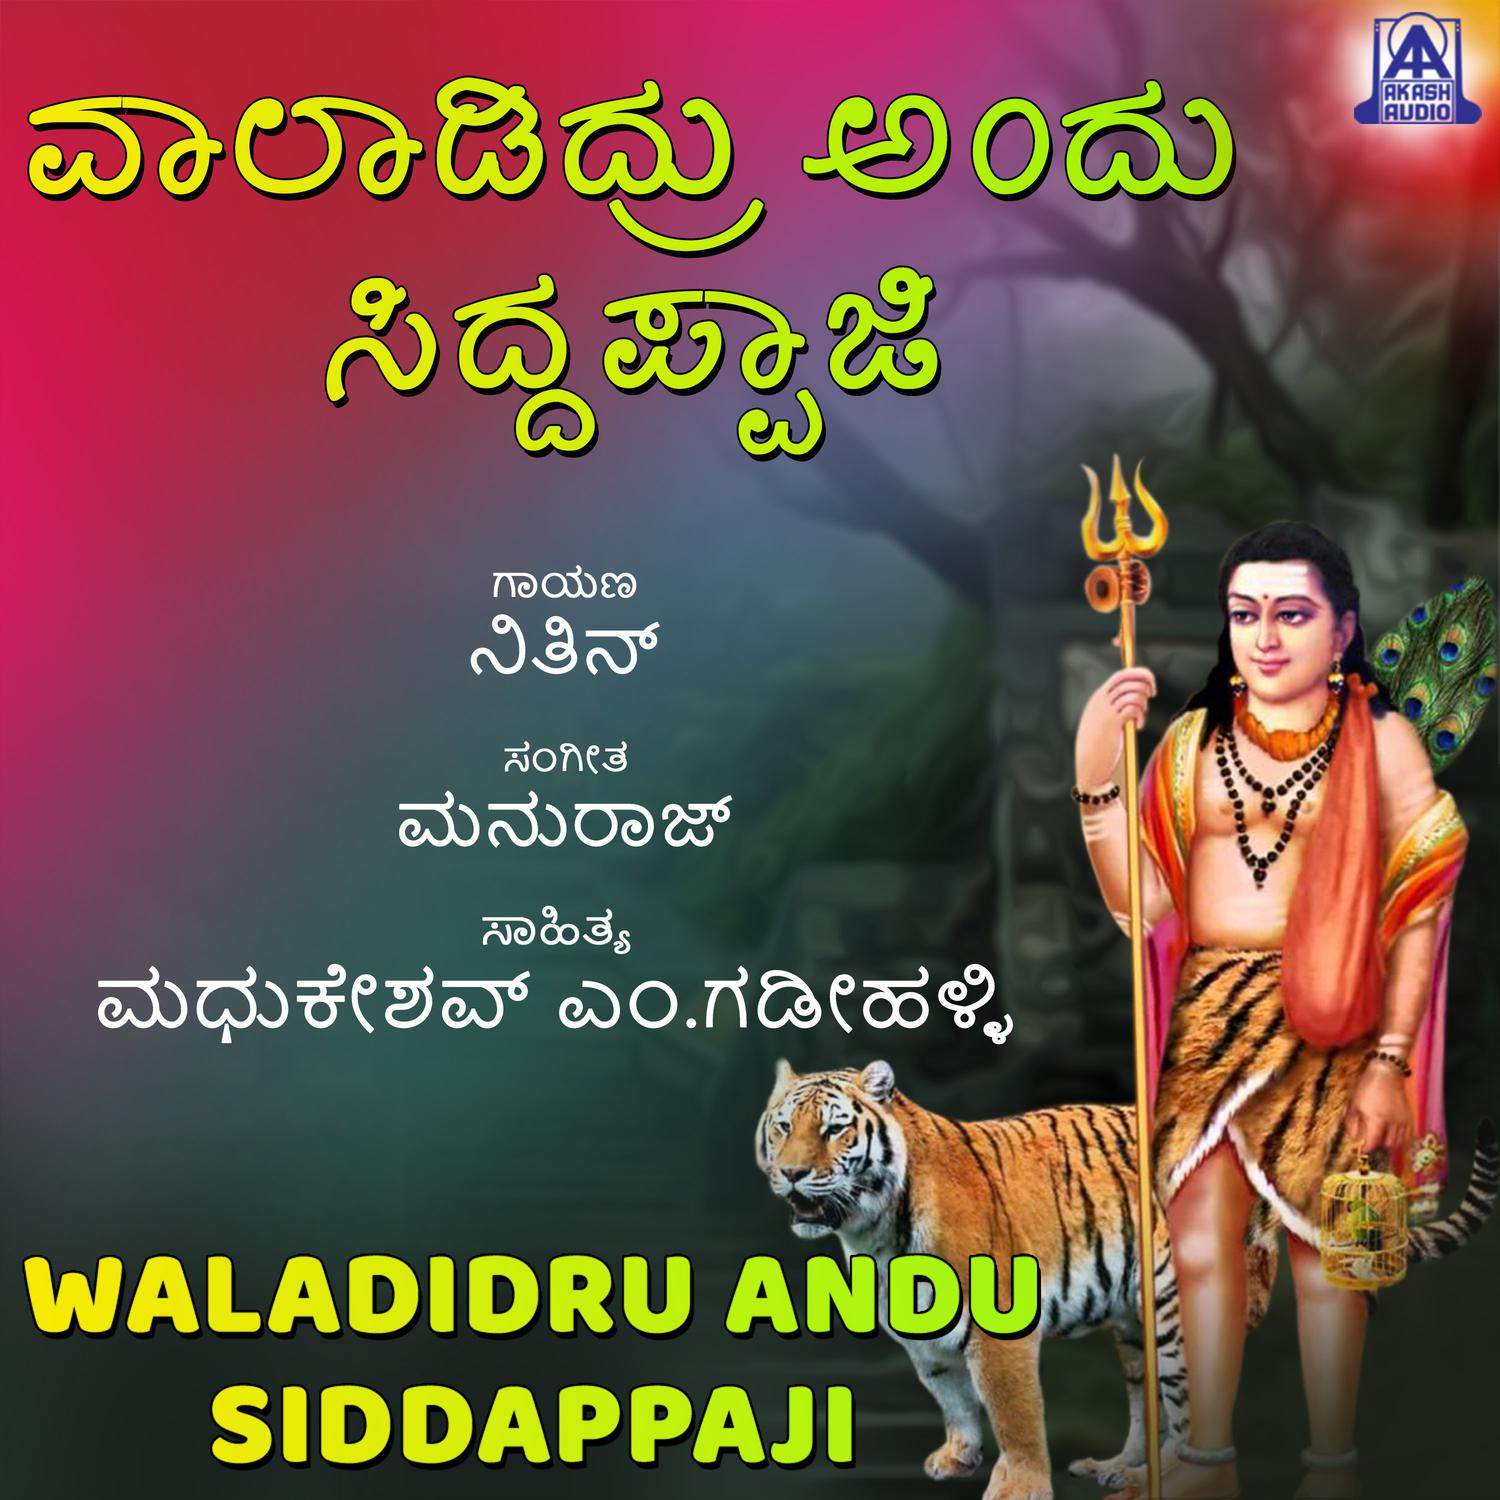 Nithin - Waladidru Andu Siddappaji